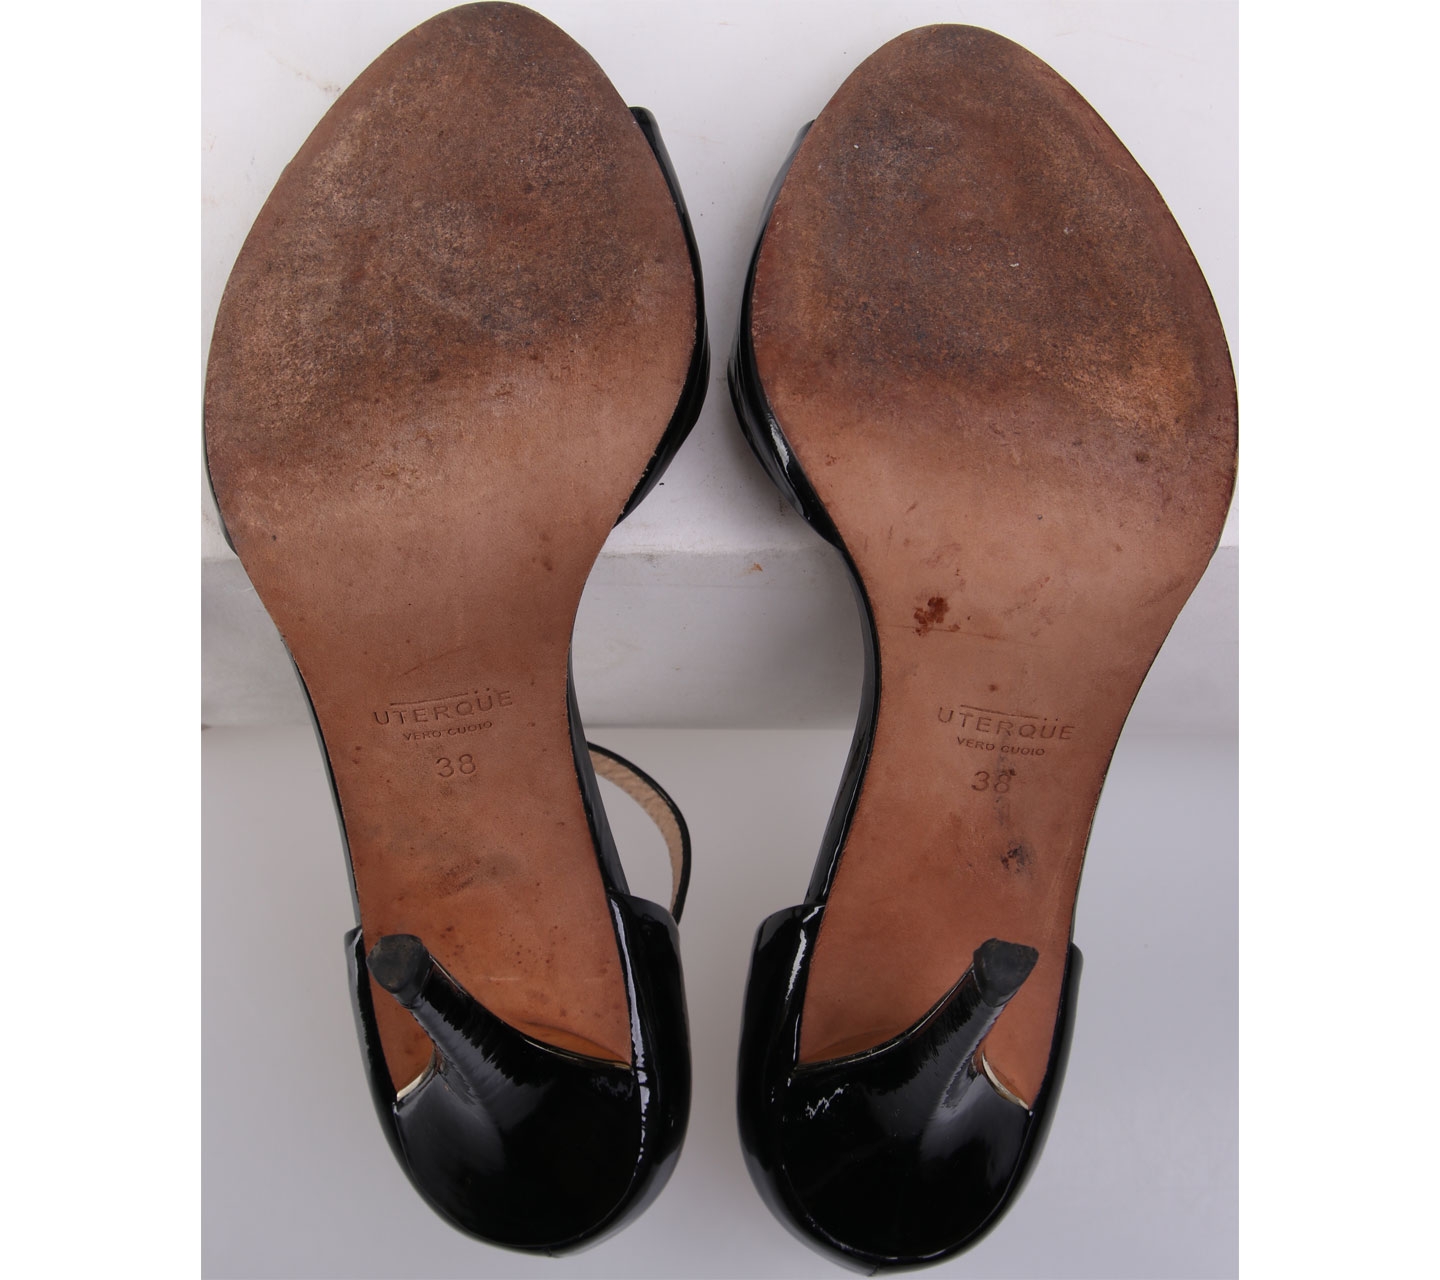 Uterque Black Heels